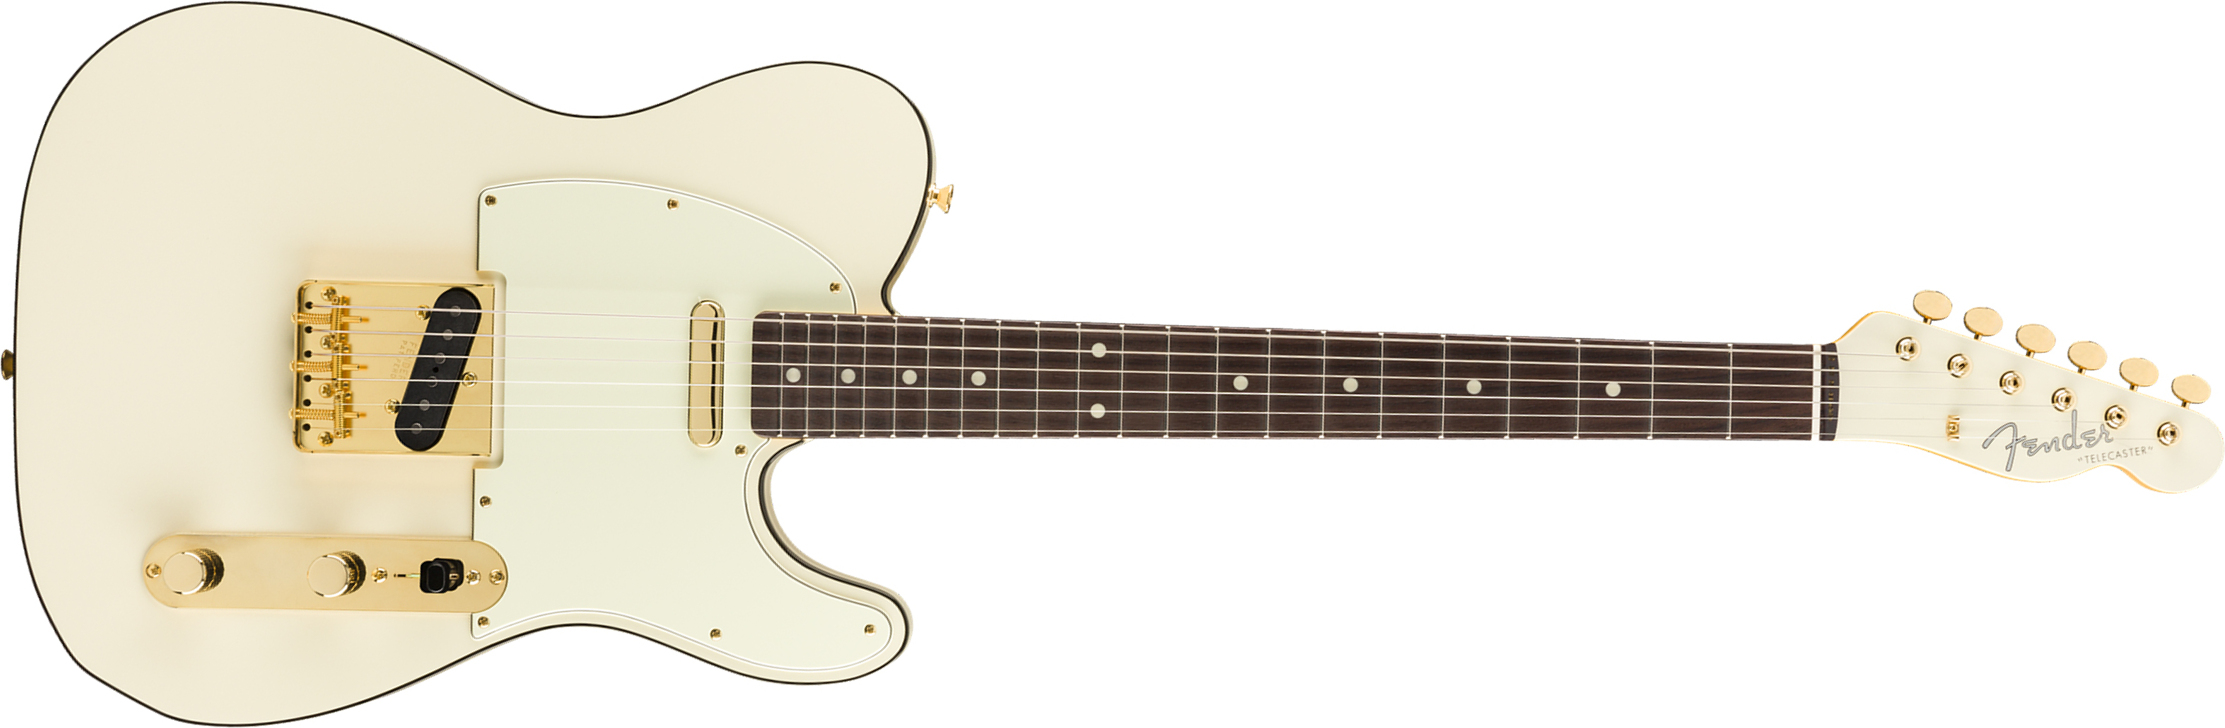 Fender Tele Daybreak Ltd 2019 Japon Gh Rw - Olympic White - Tel shape electric guitar - Main picture